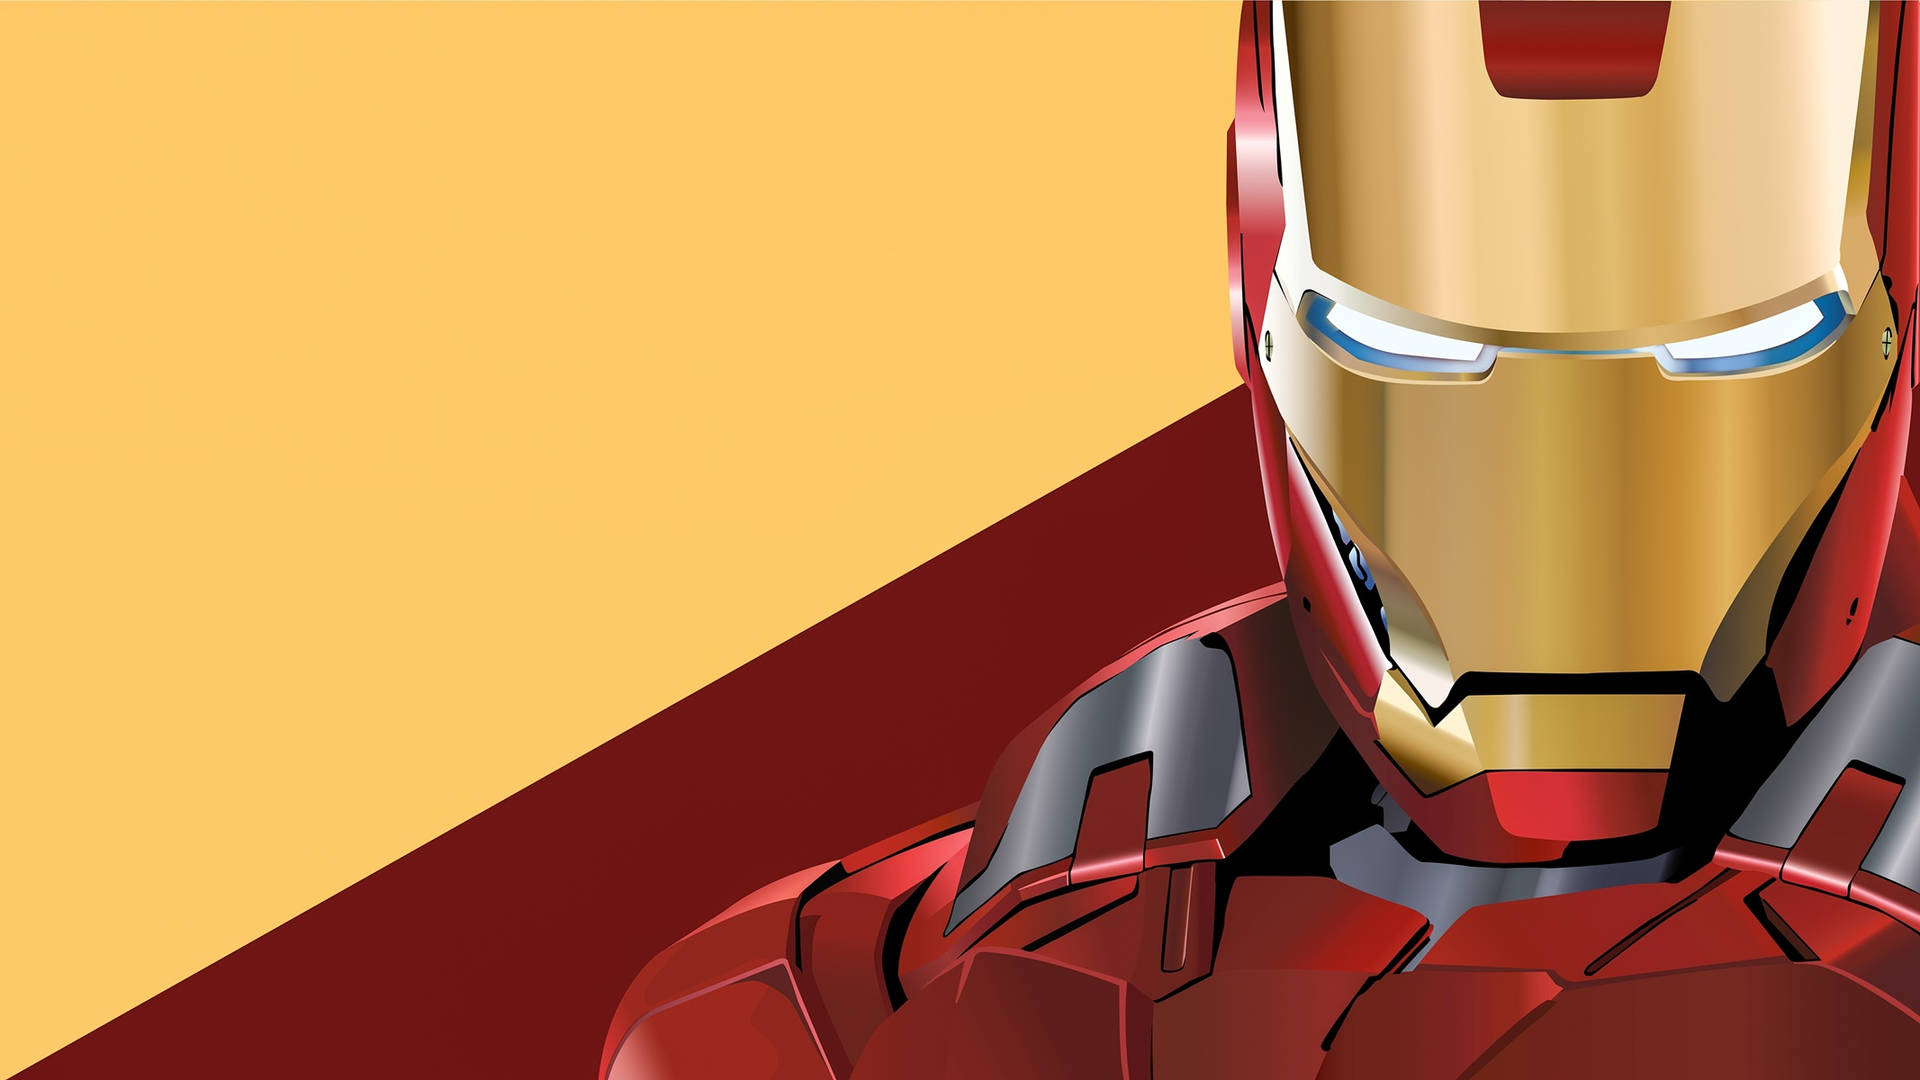 Artedigital De Iron Man, El Superhéroe. Fondo de pantalla